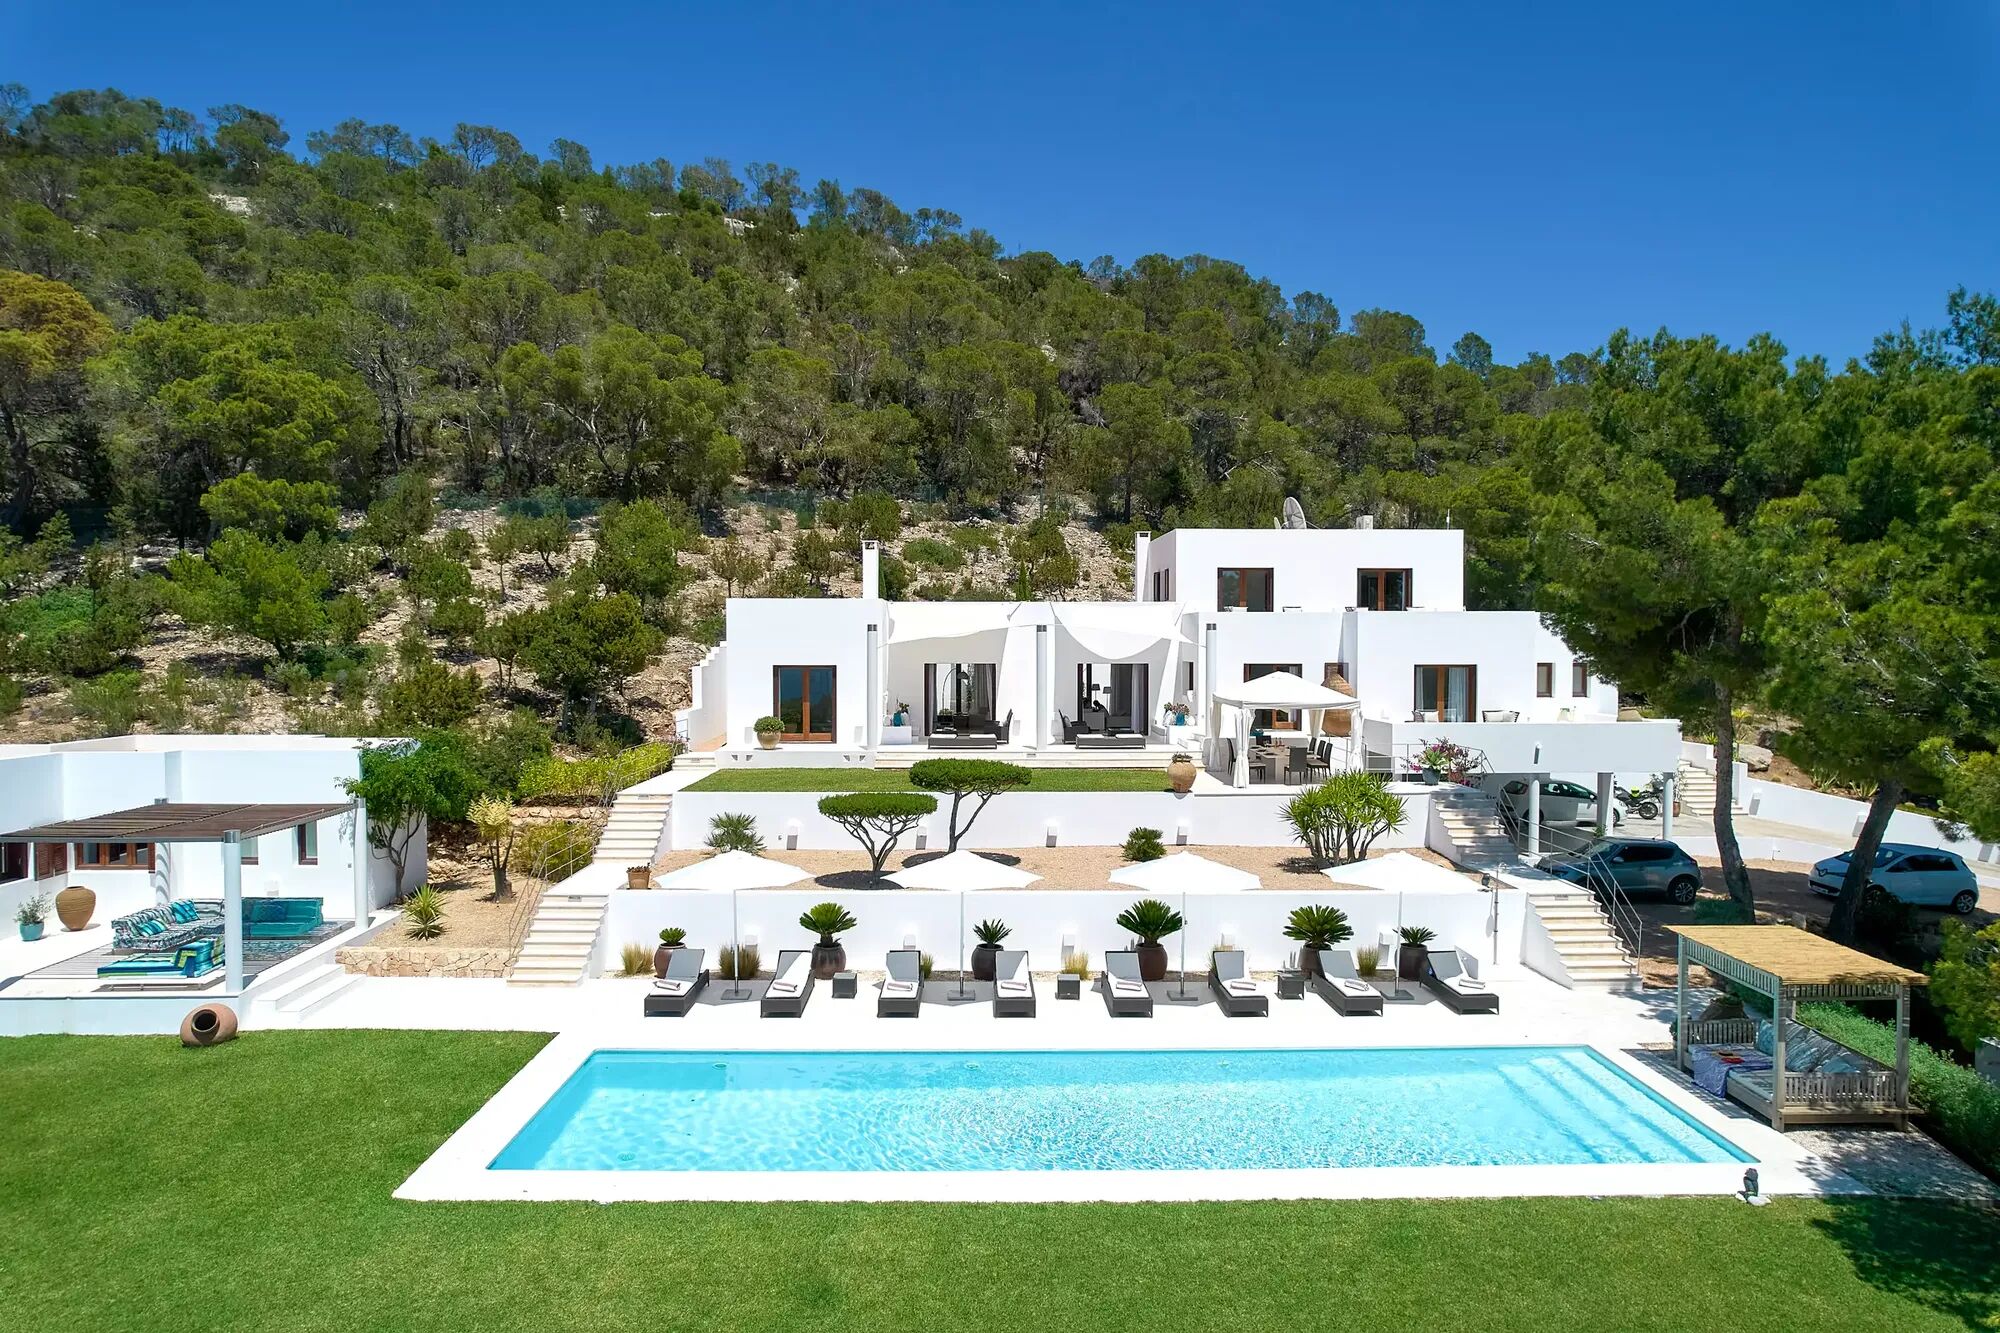 The exterior of rental Villa Aleni in Ibiza set amongst the hills